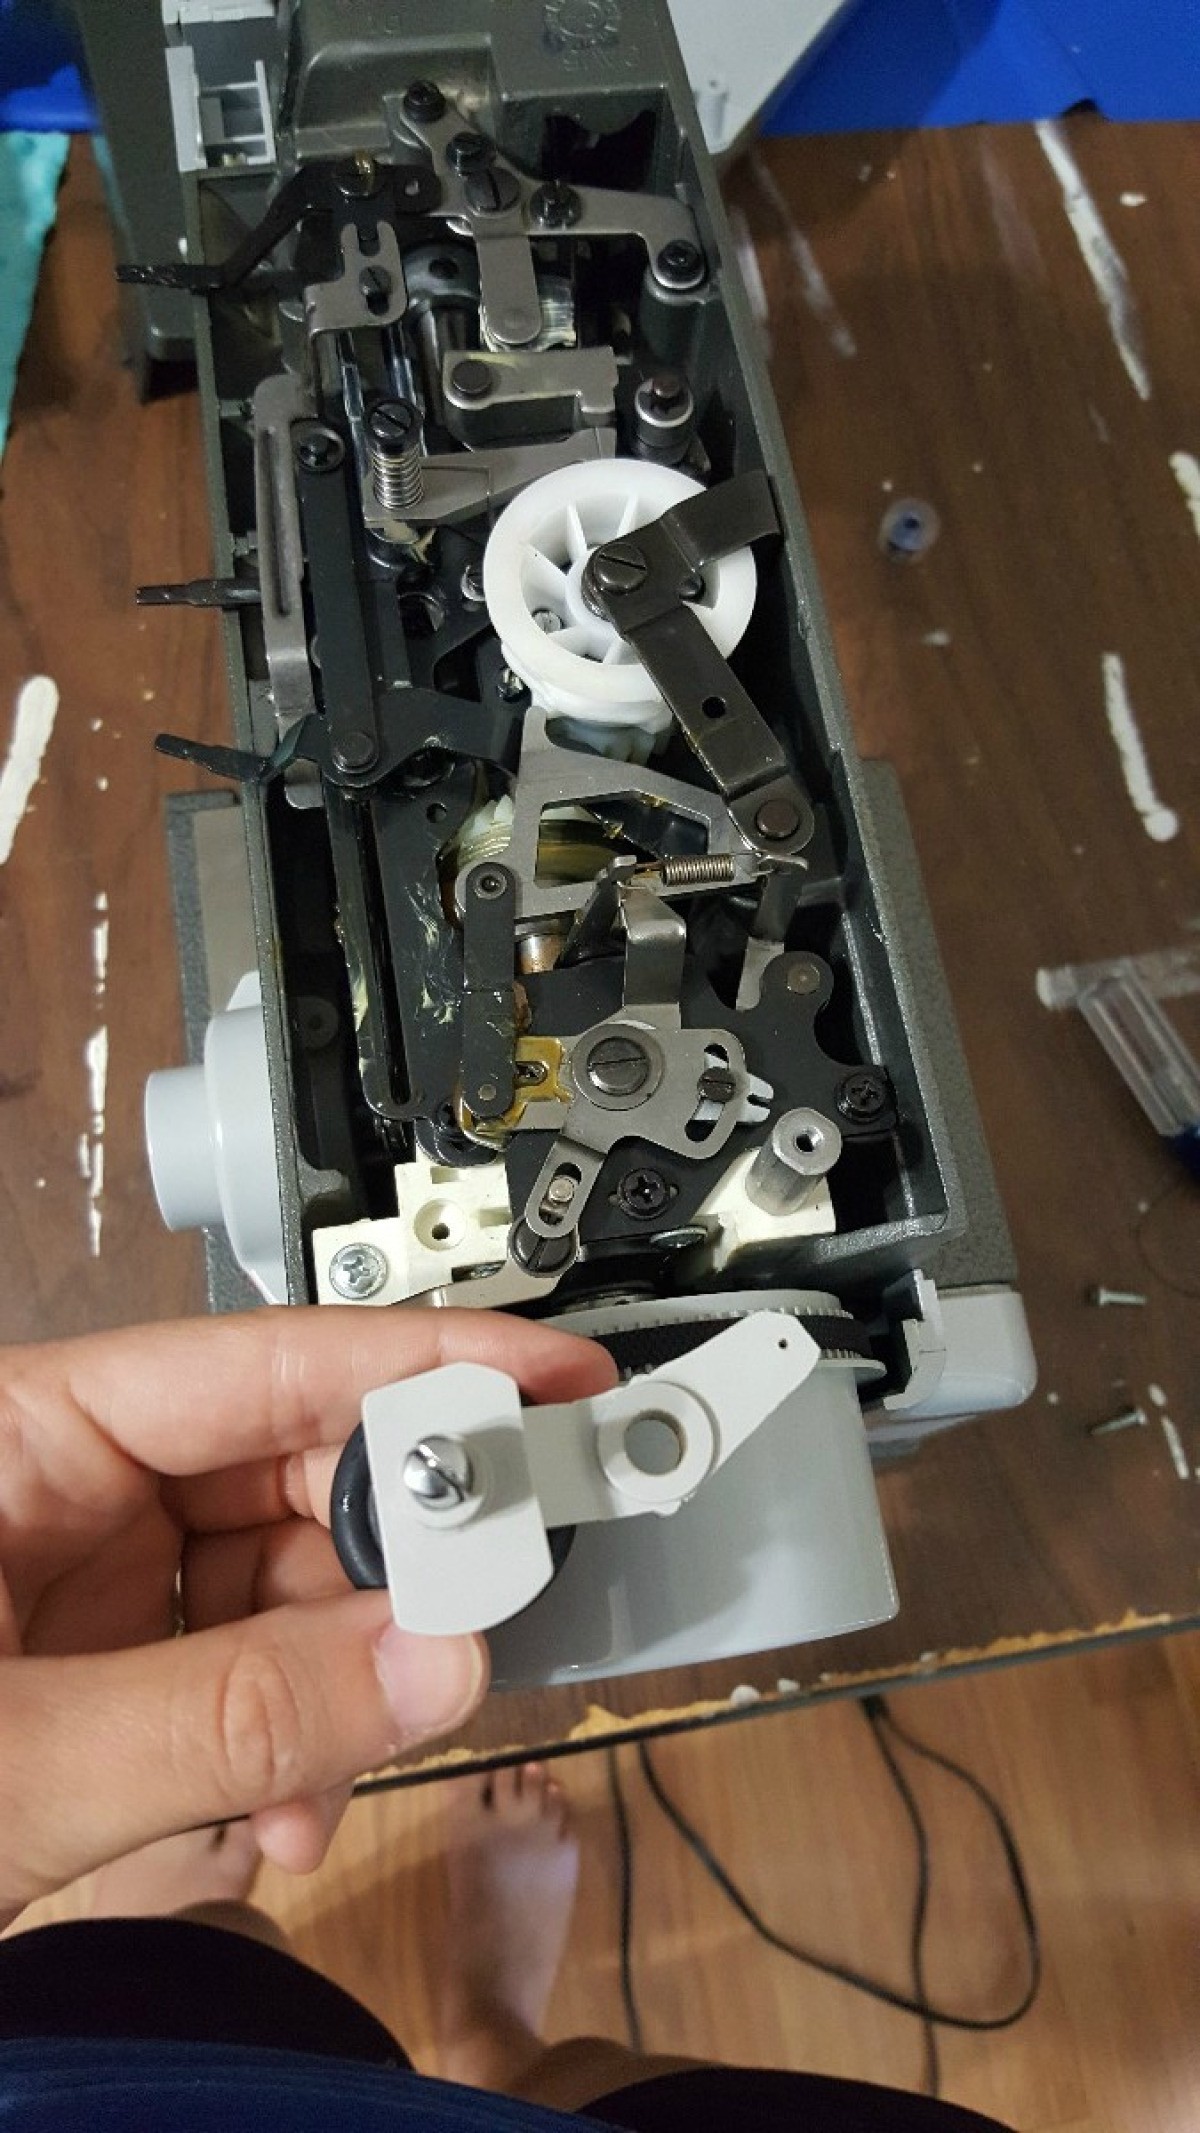 Can't Fix Bobbin Winder : r/sewingmachinerepair